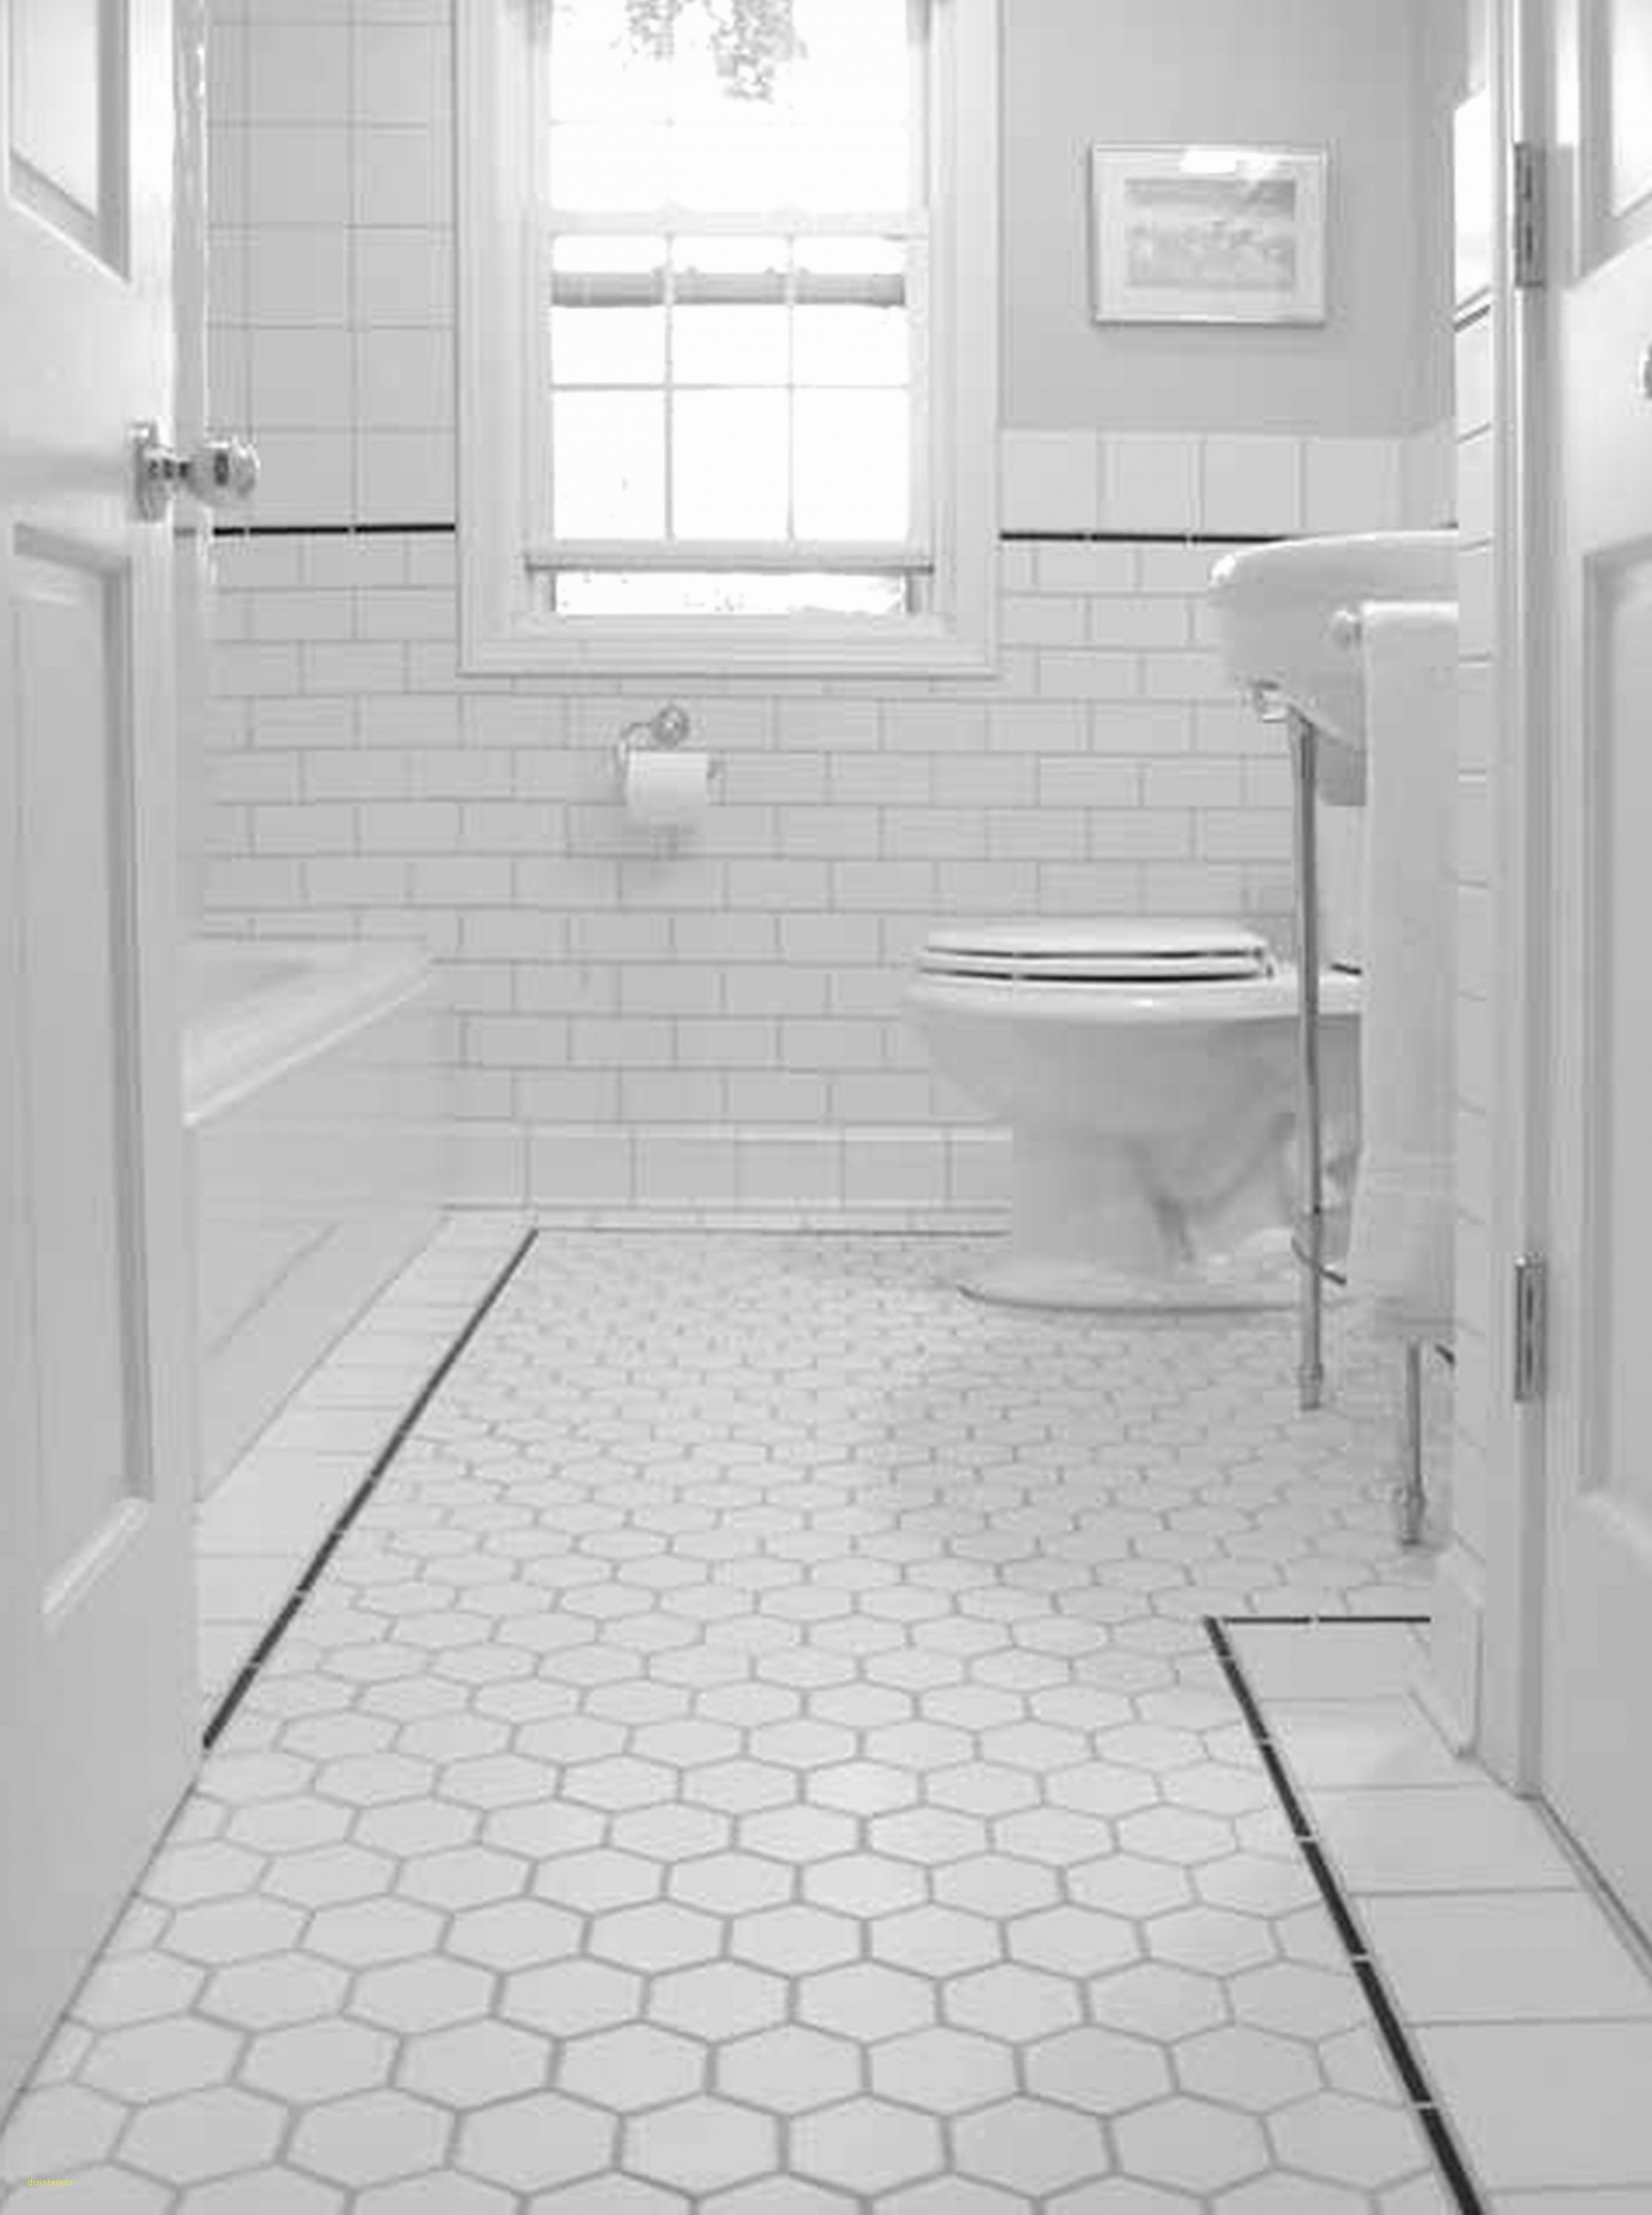 1 3 4 Hardwood Floors Of 39 New Laying Floor Tiles Photo Inside Laying Bathroom Floor Tiles New Stunning Inspirational Installing Faucet H Sink New Bathroom I 0d Decor